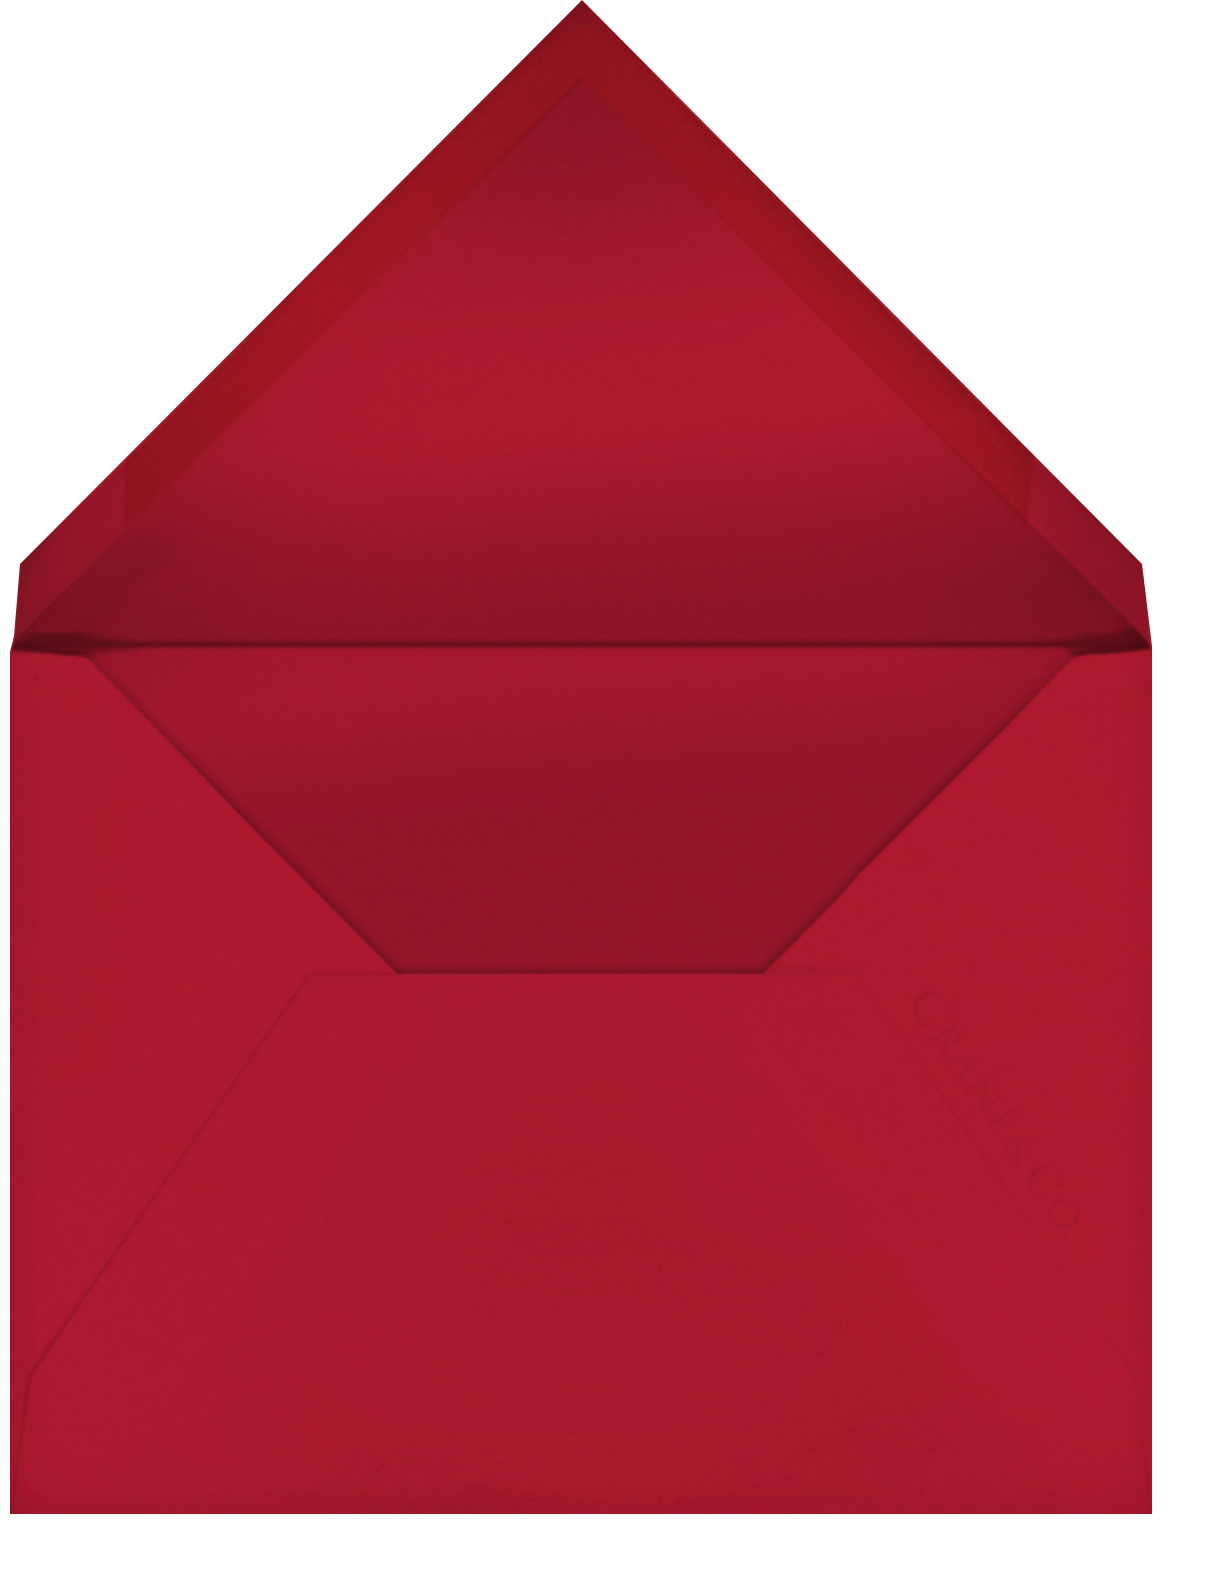 Red Lanterns Photo - Tall - Paperless Post - Envelope